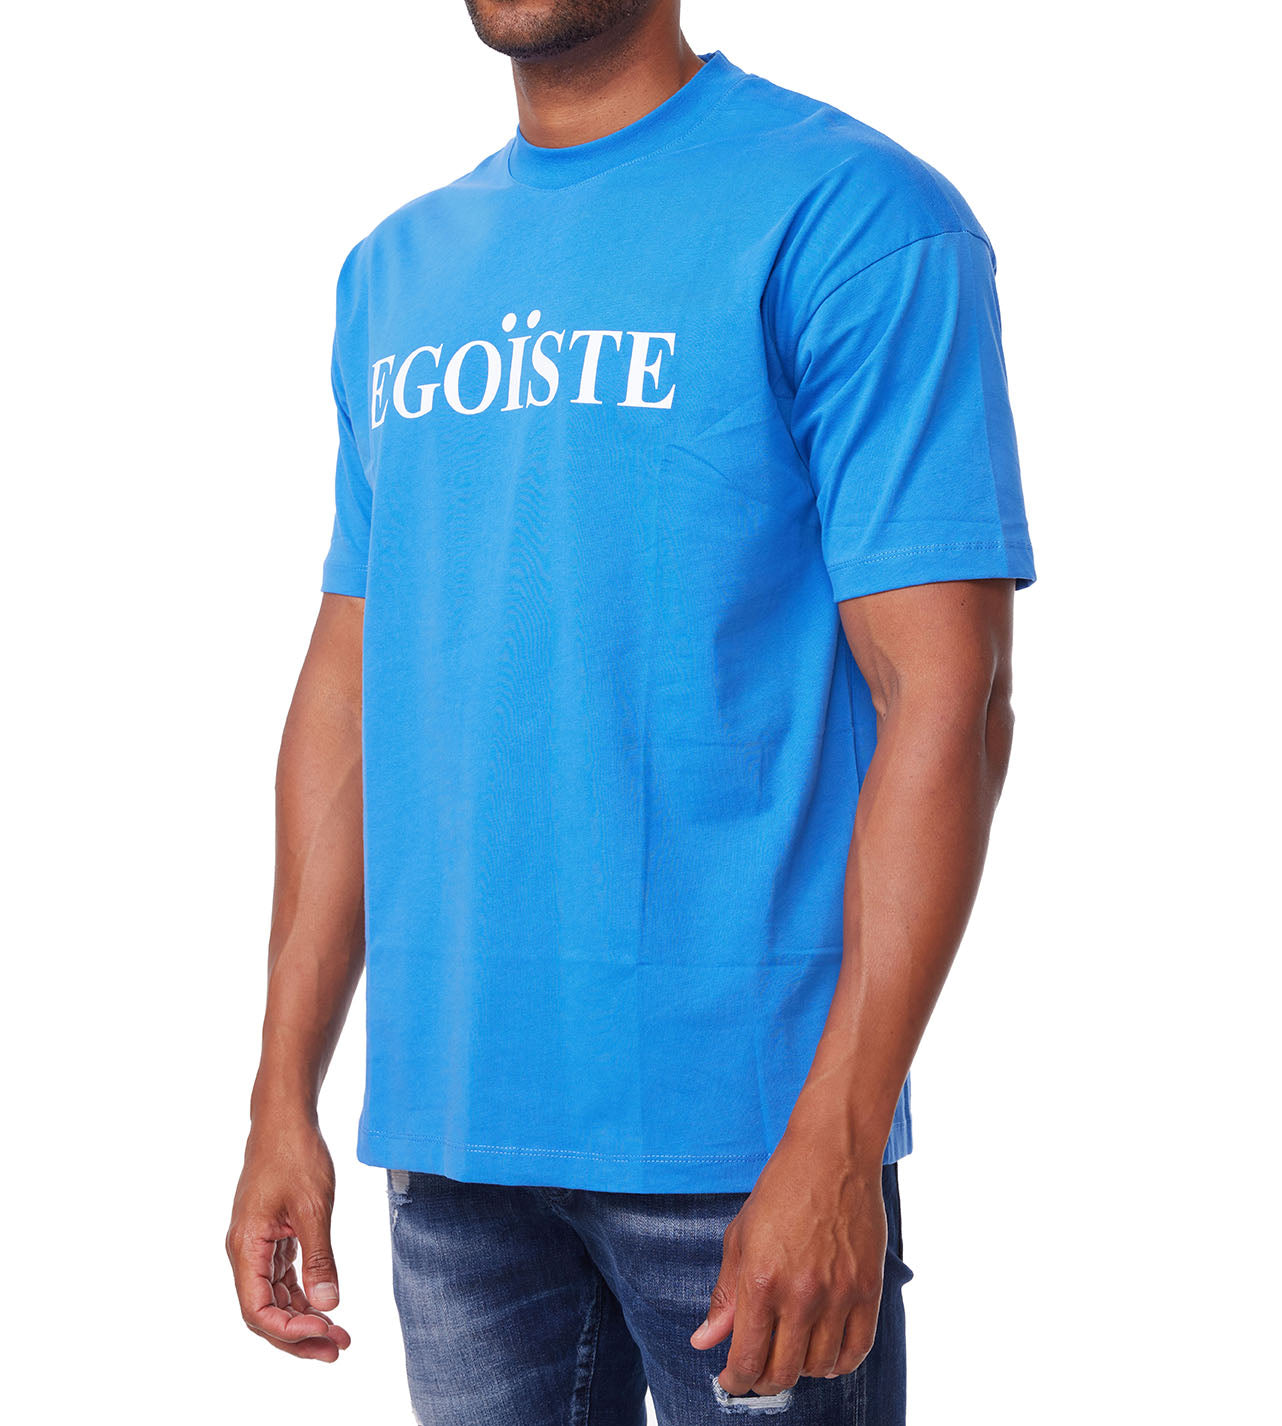 Men's T-shirt, oversize fit, "EGOISTE" print on the front, model 1195, blue